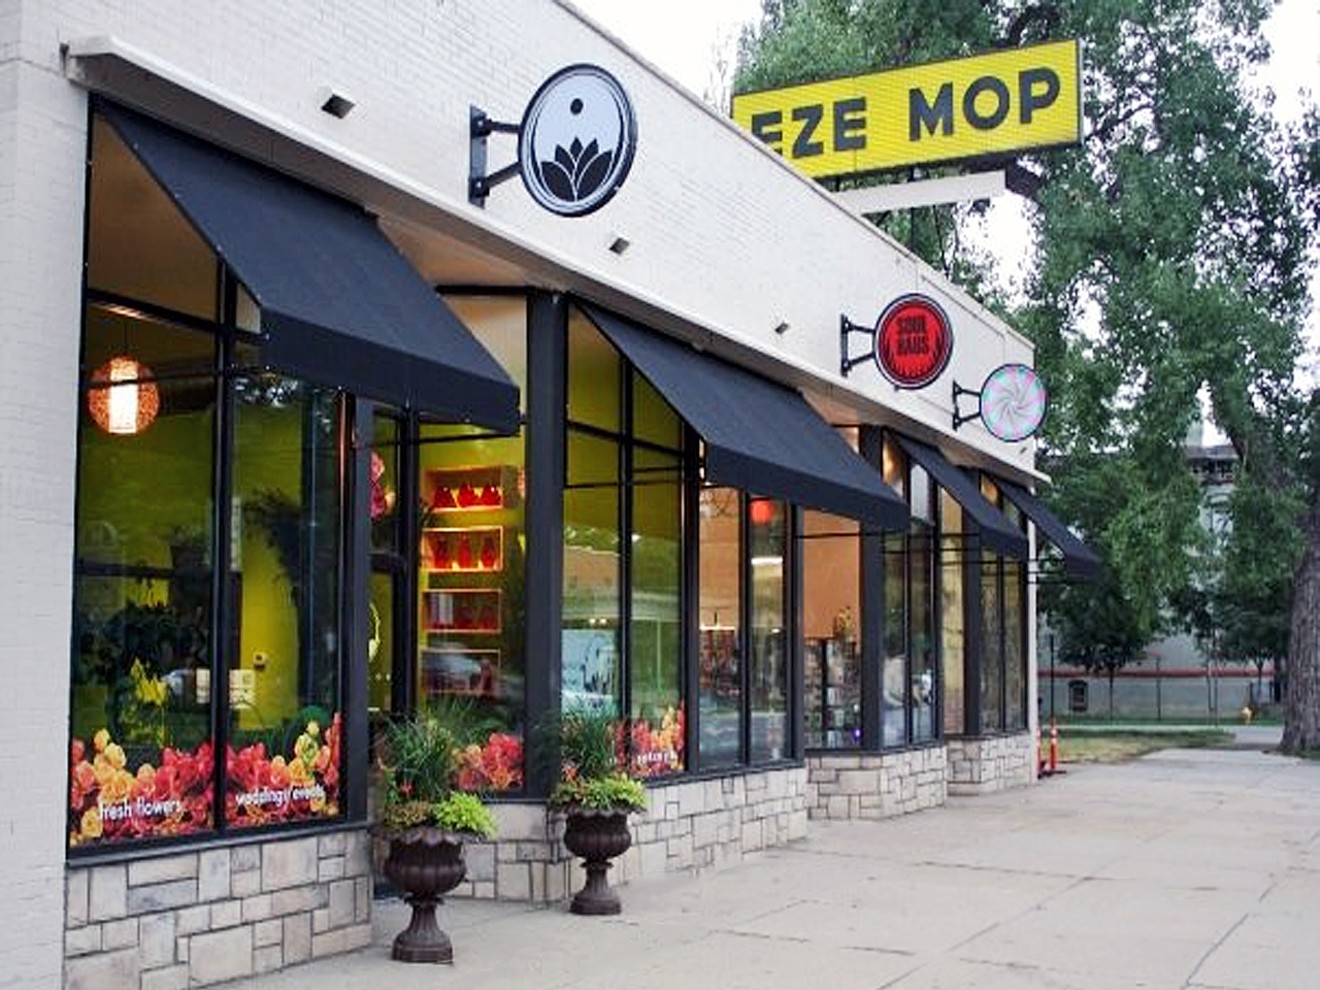 The EZE Mop building was transformed a decade ago.